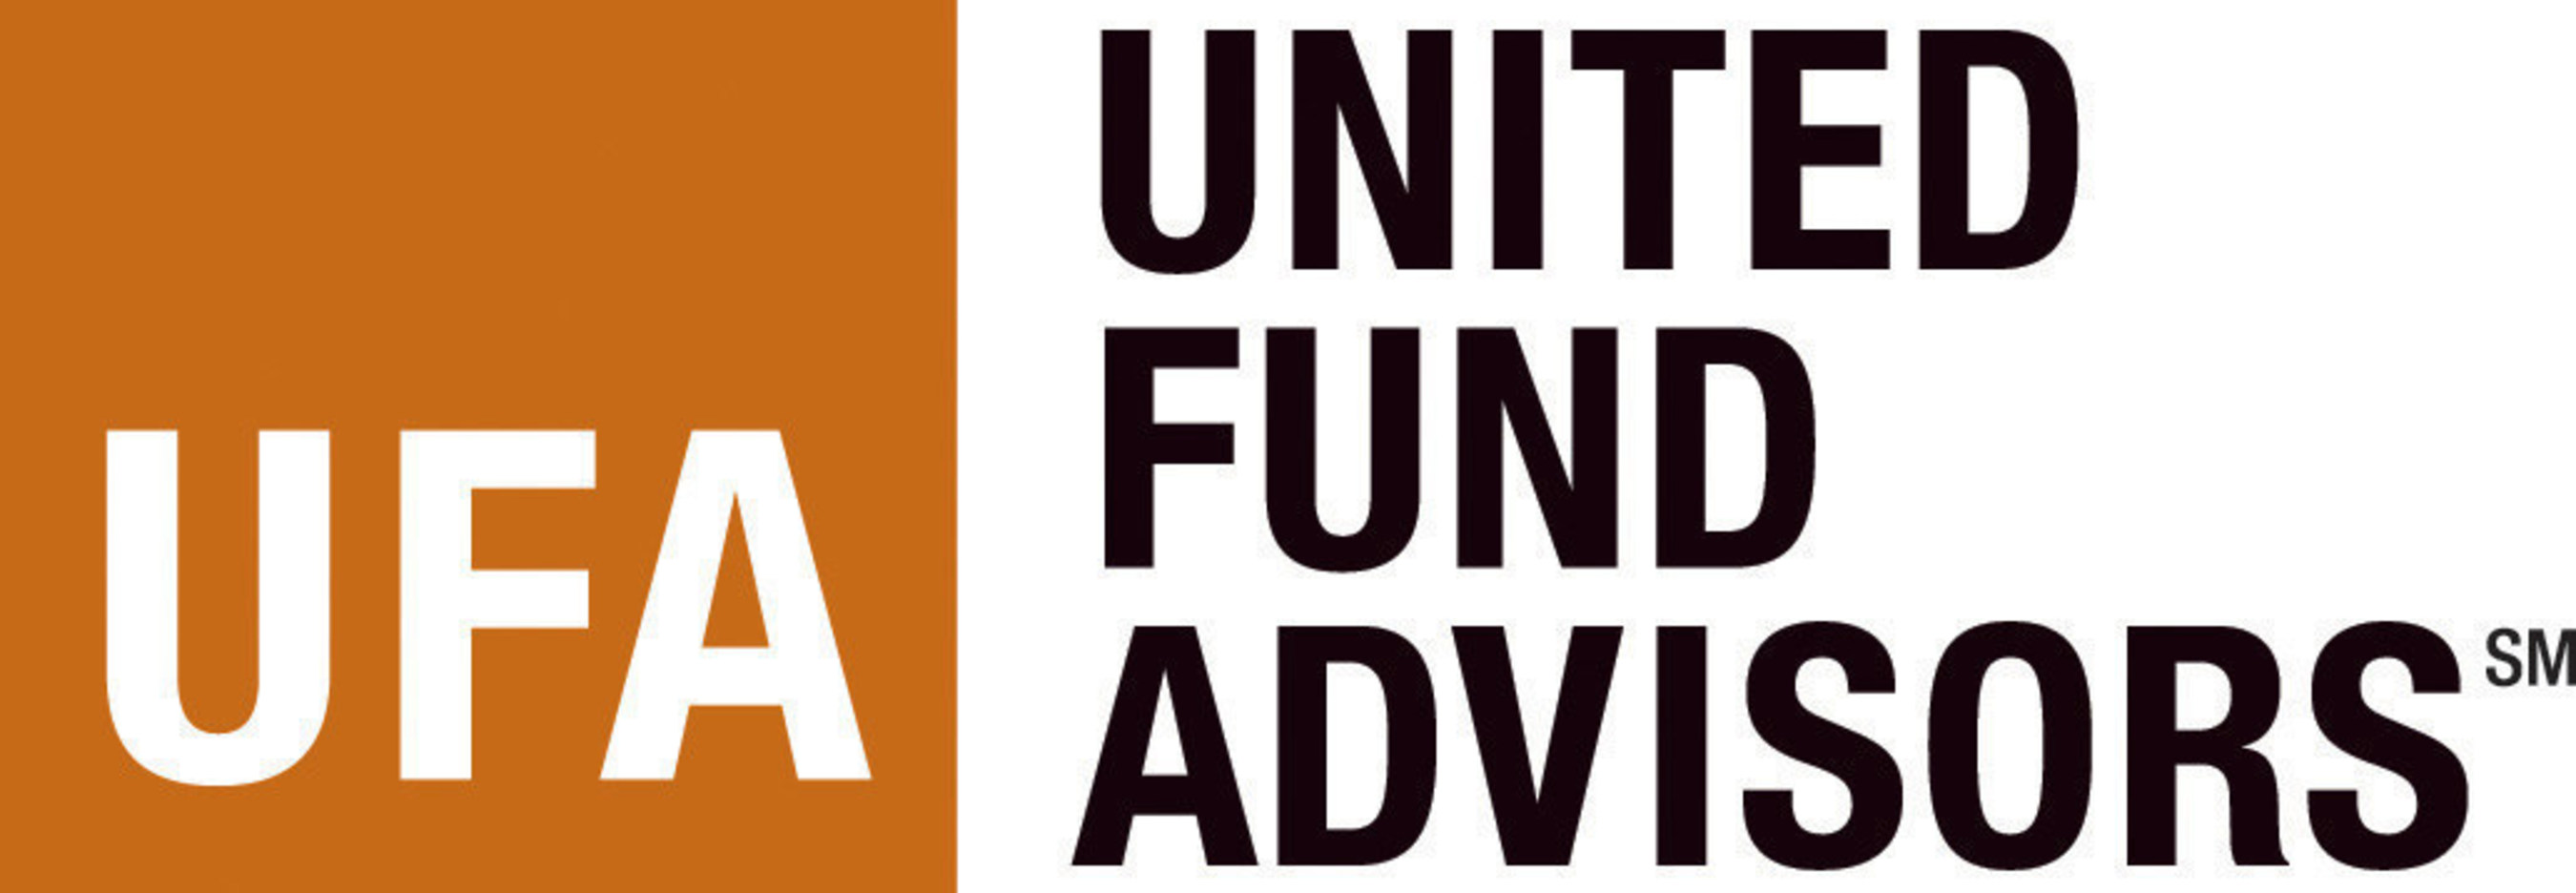 United Fund Advisors